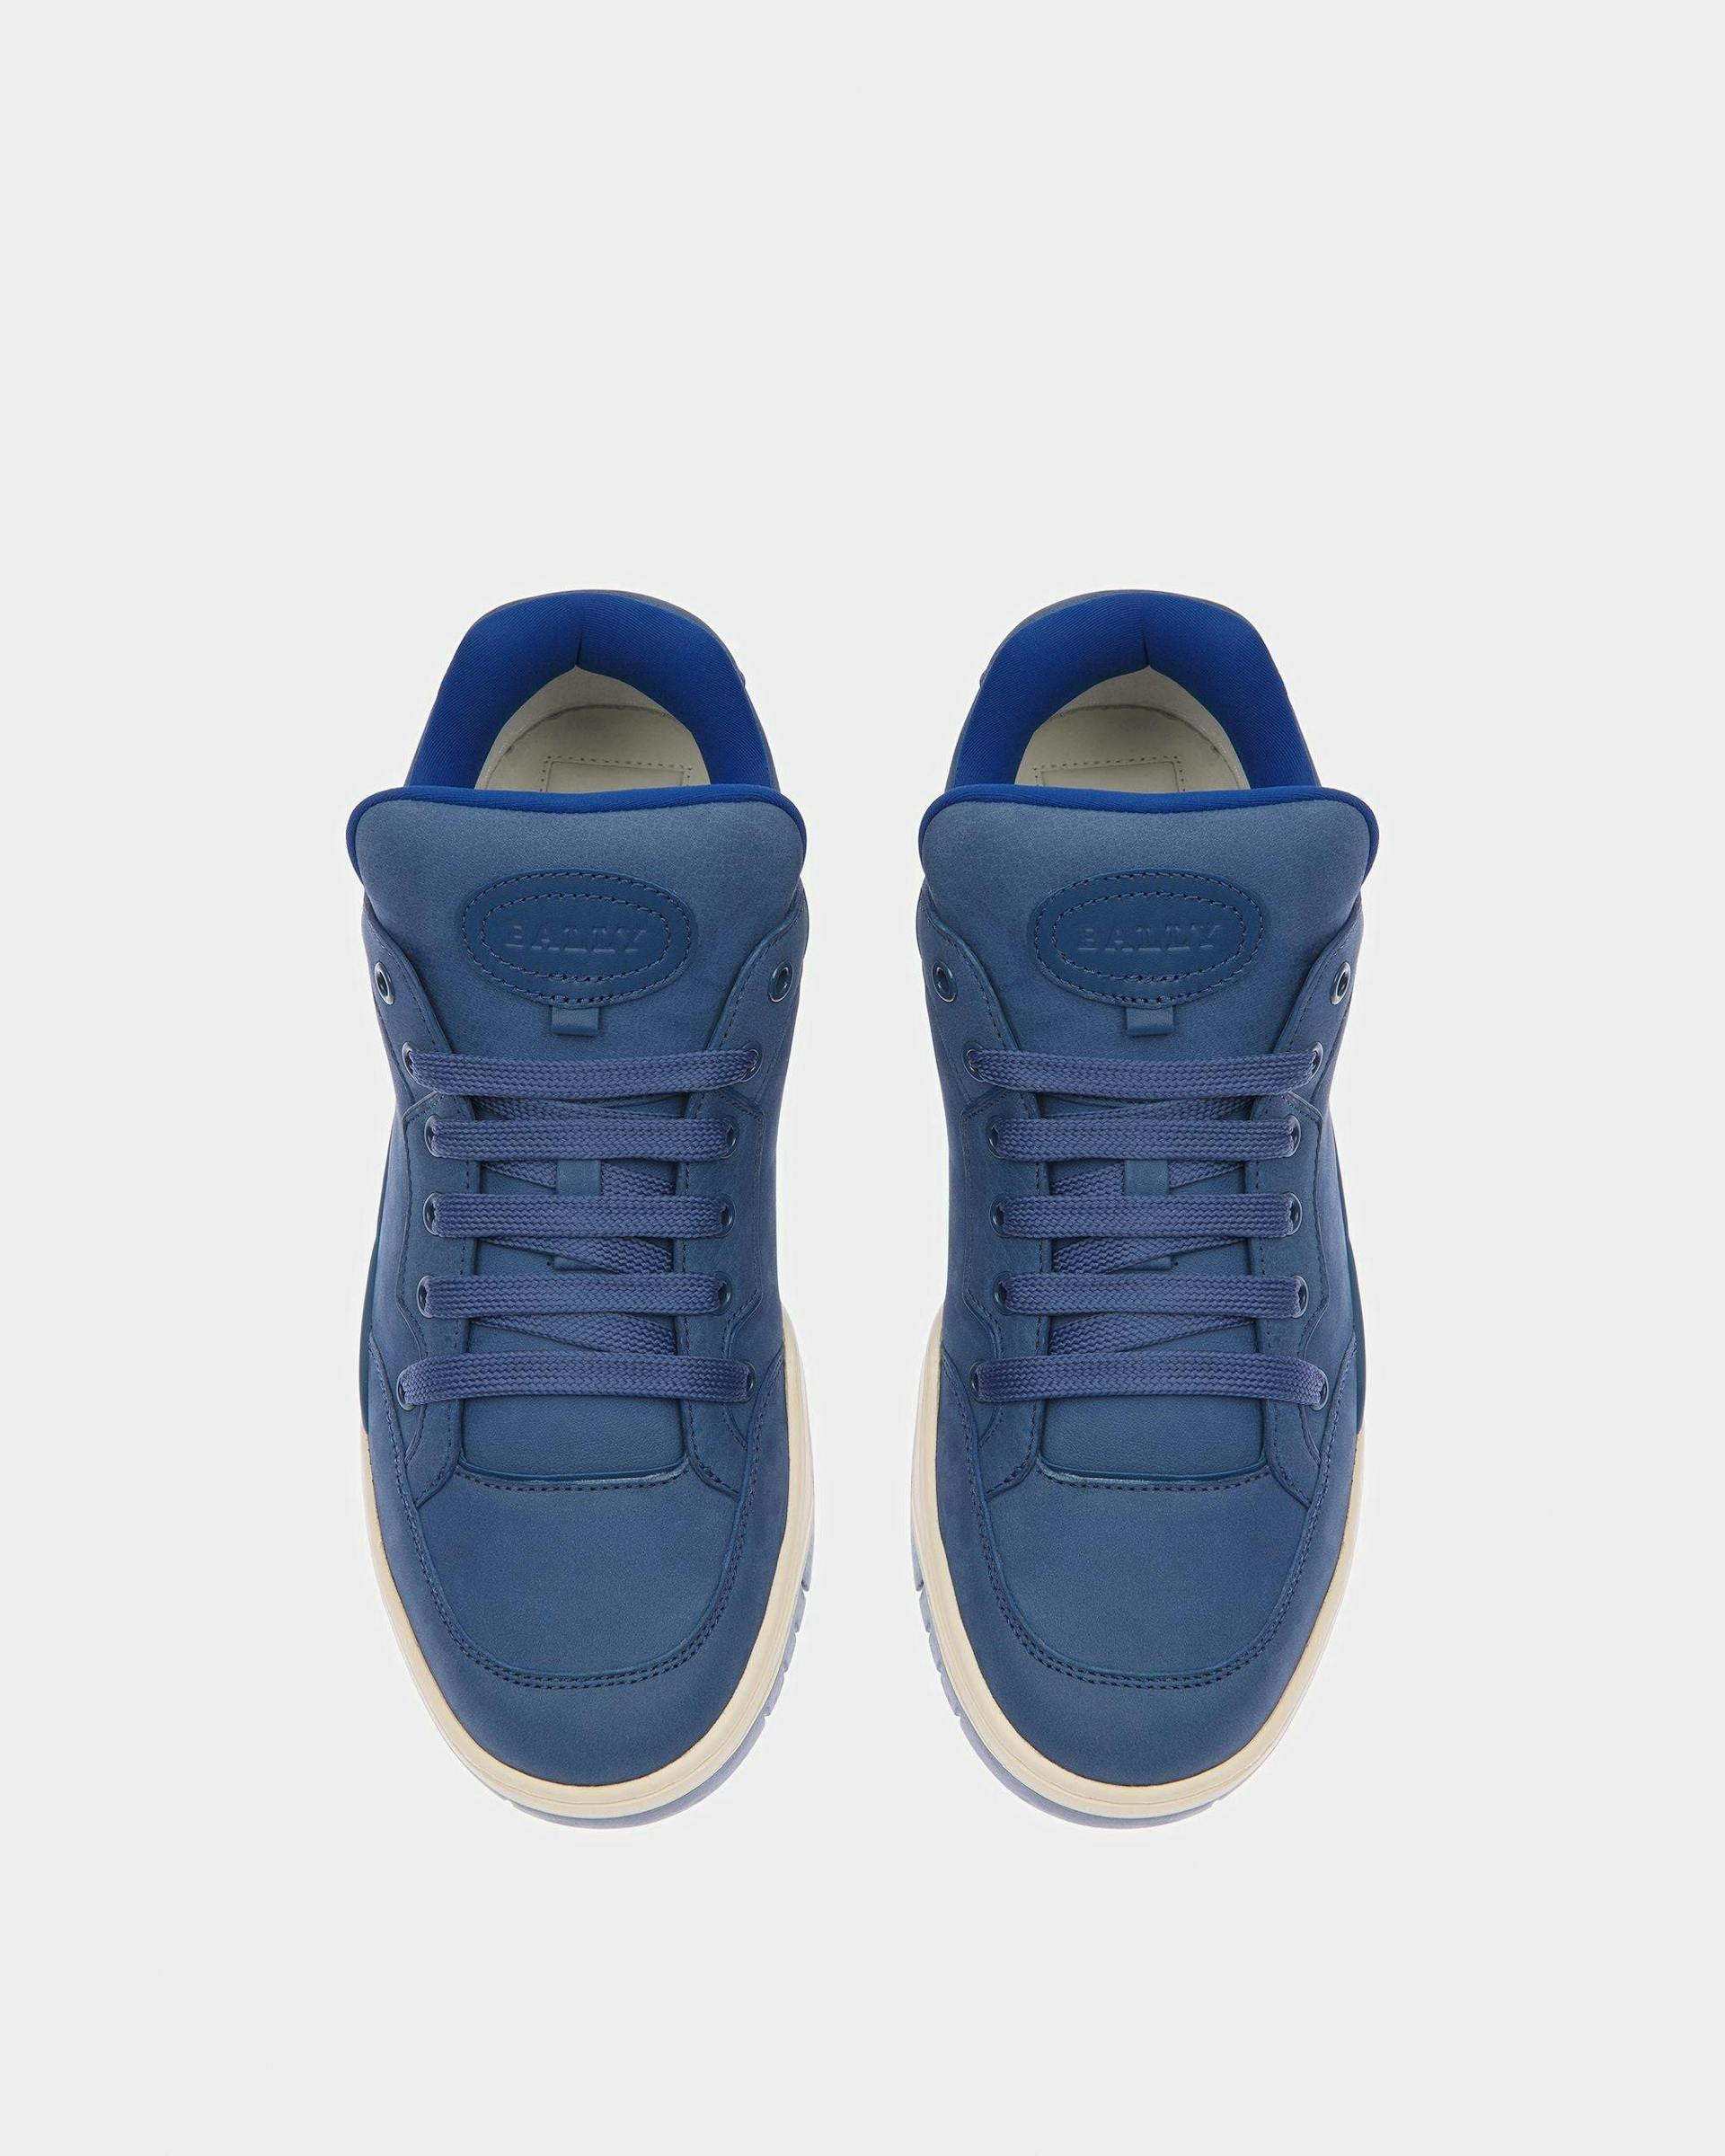 Kiro Leather Sneakers In Blue Neon - Men's - Bally - 02